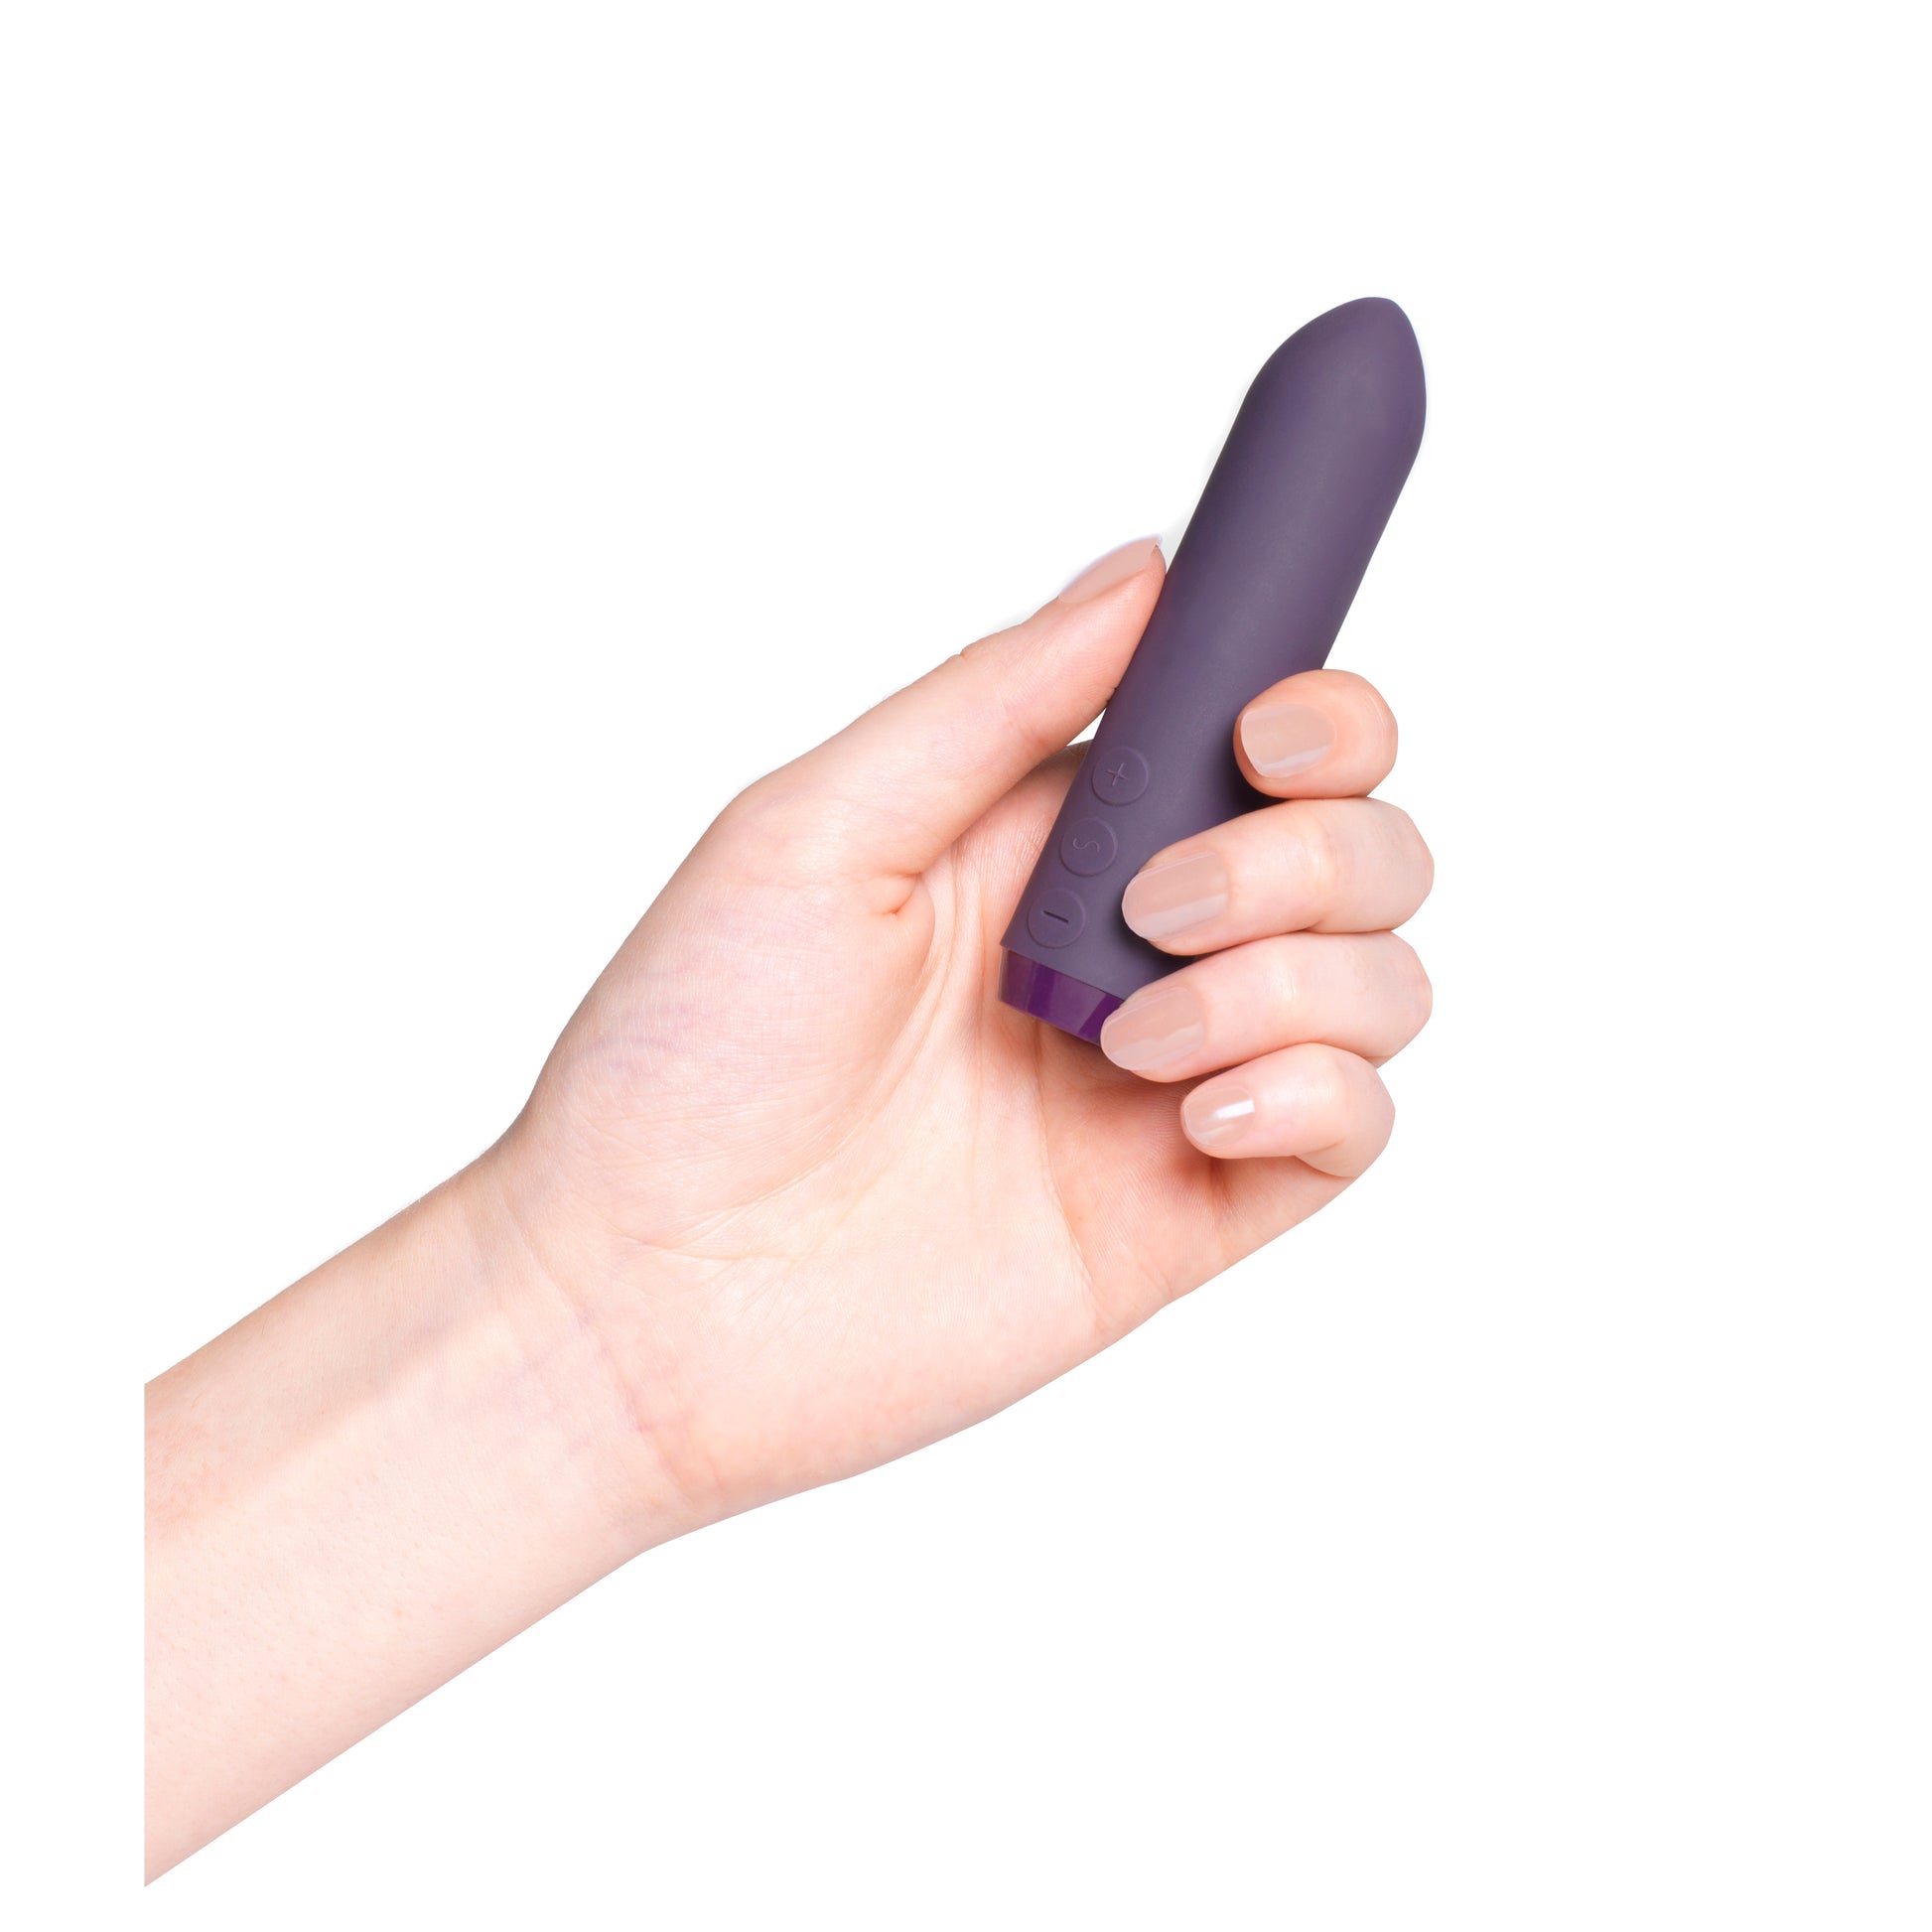 Hand holding purple classic bullet vibrator on white background